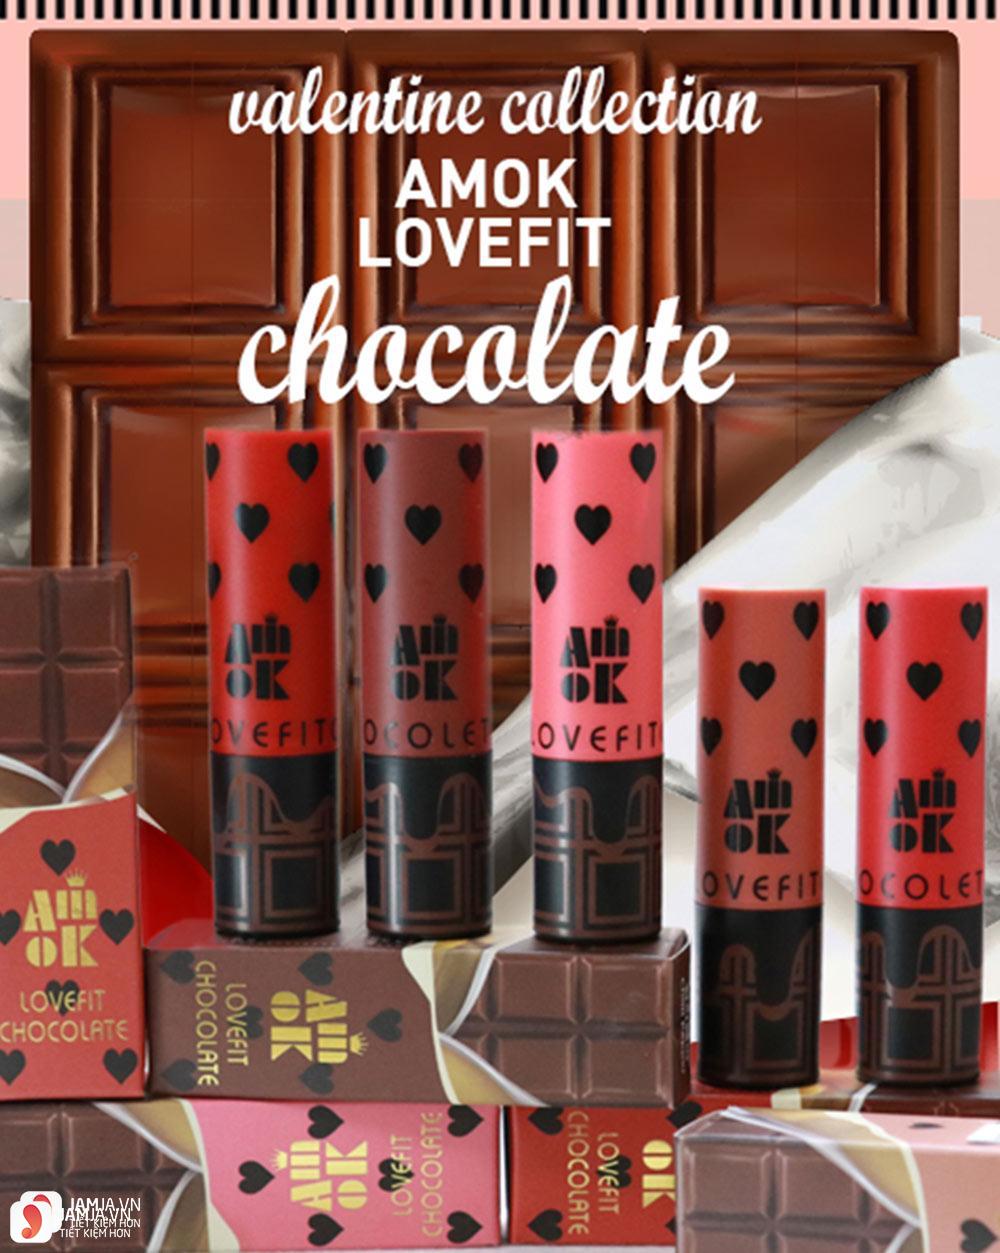 Son Amok Lovefit Chocolate 1